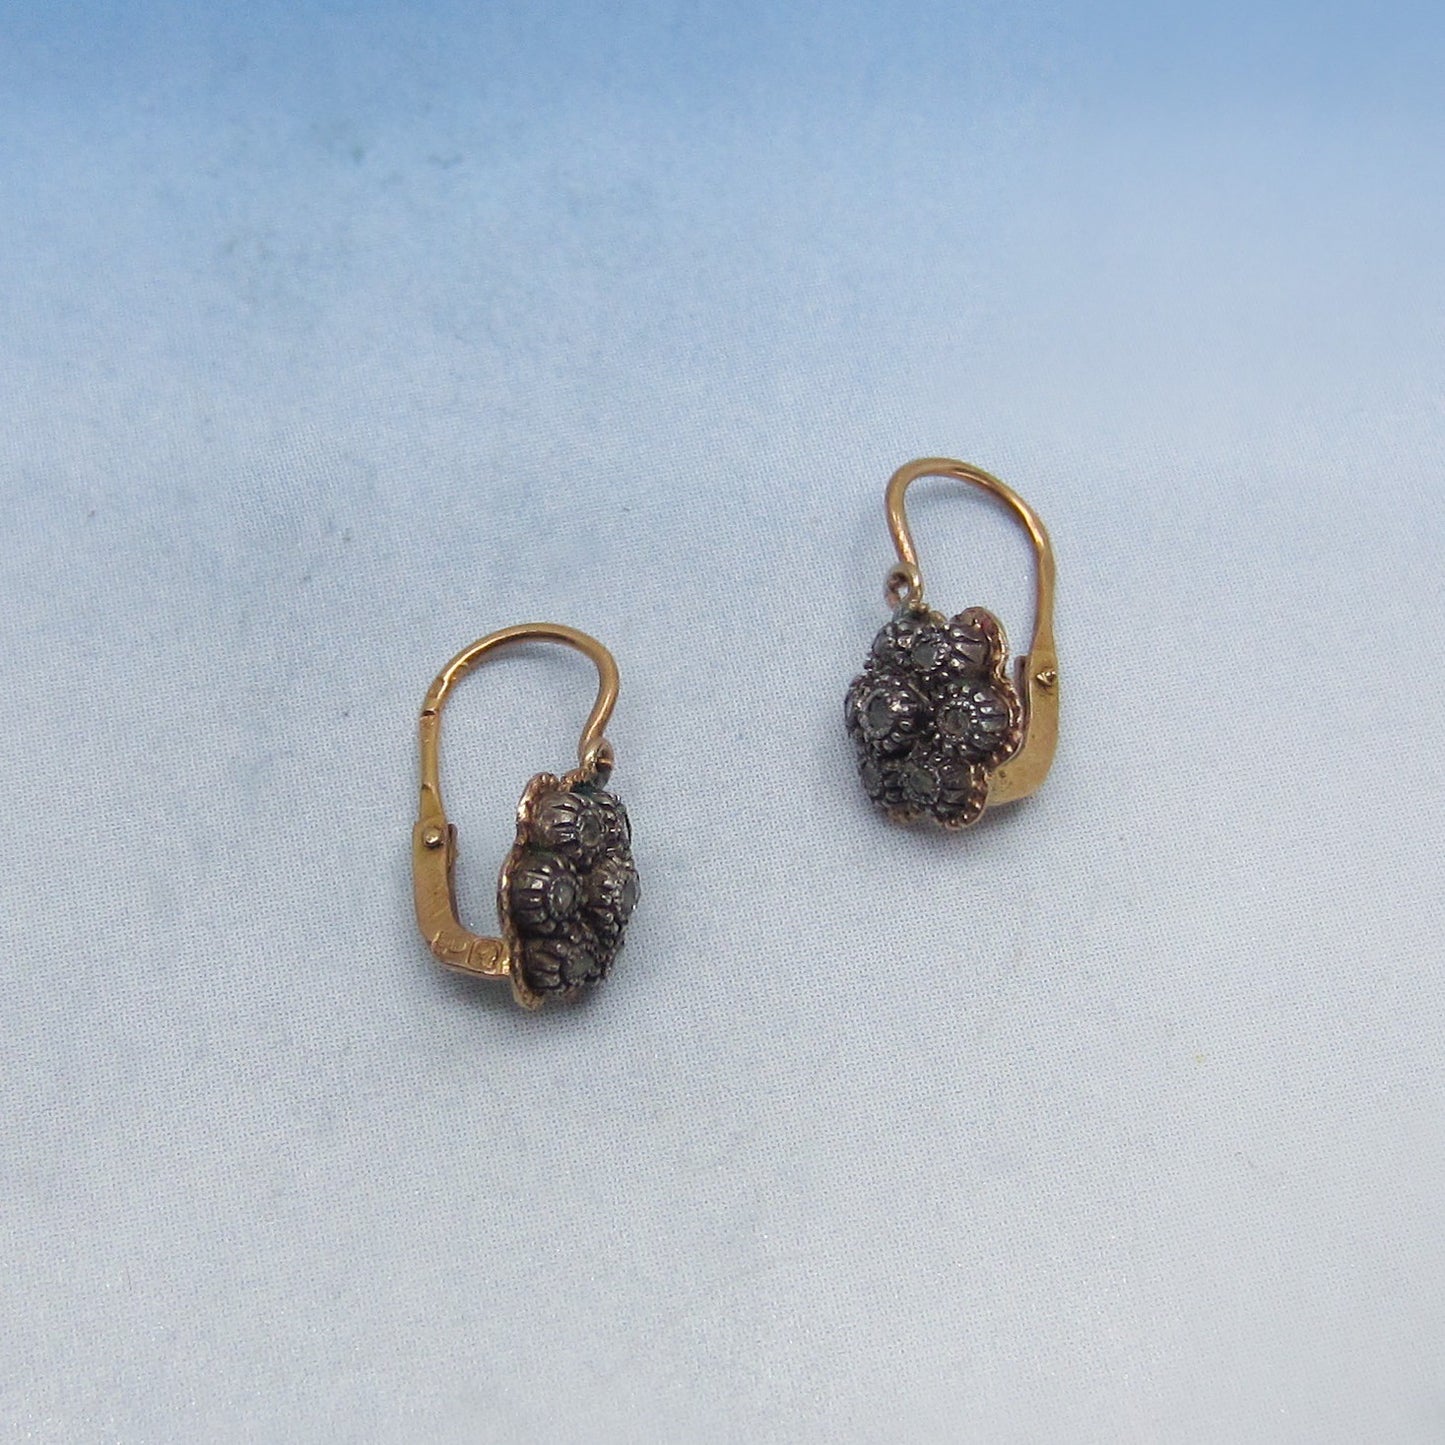 SOLD—Vintage Tiny Rose Cut Diamond Cluster Earrings Silver/14k c. 1940